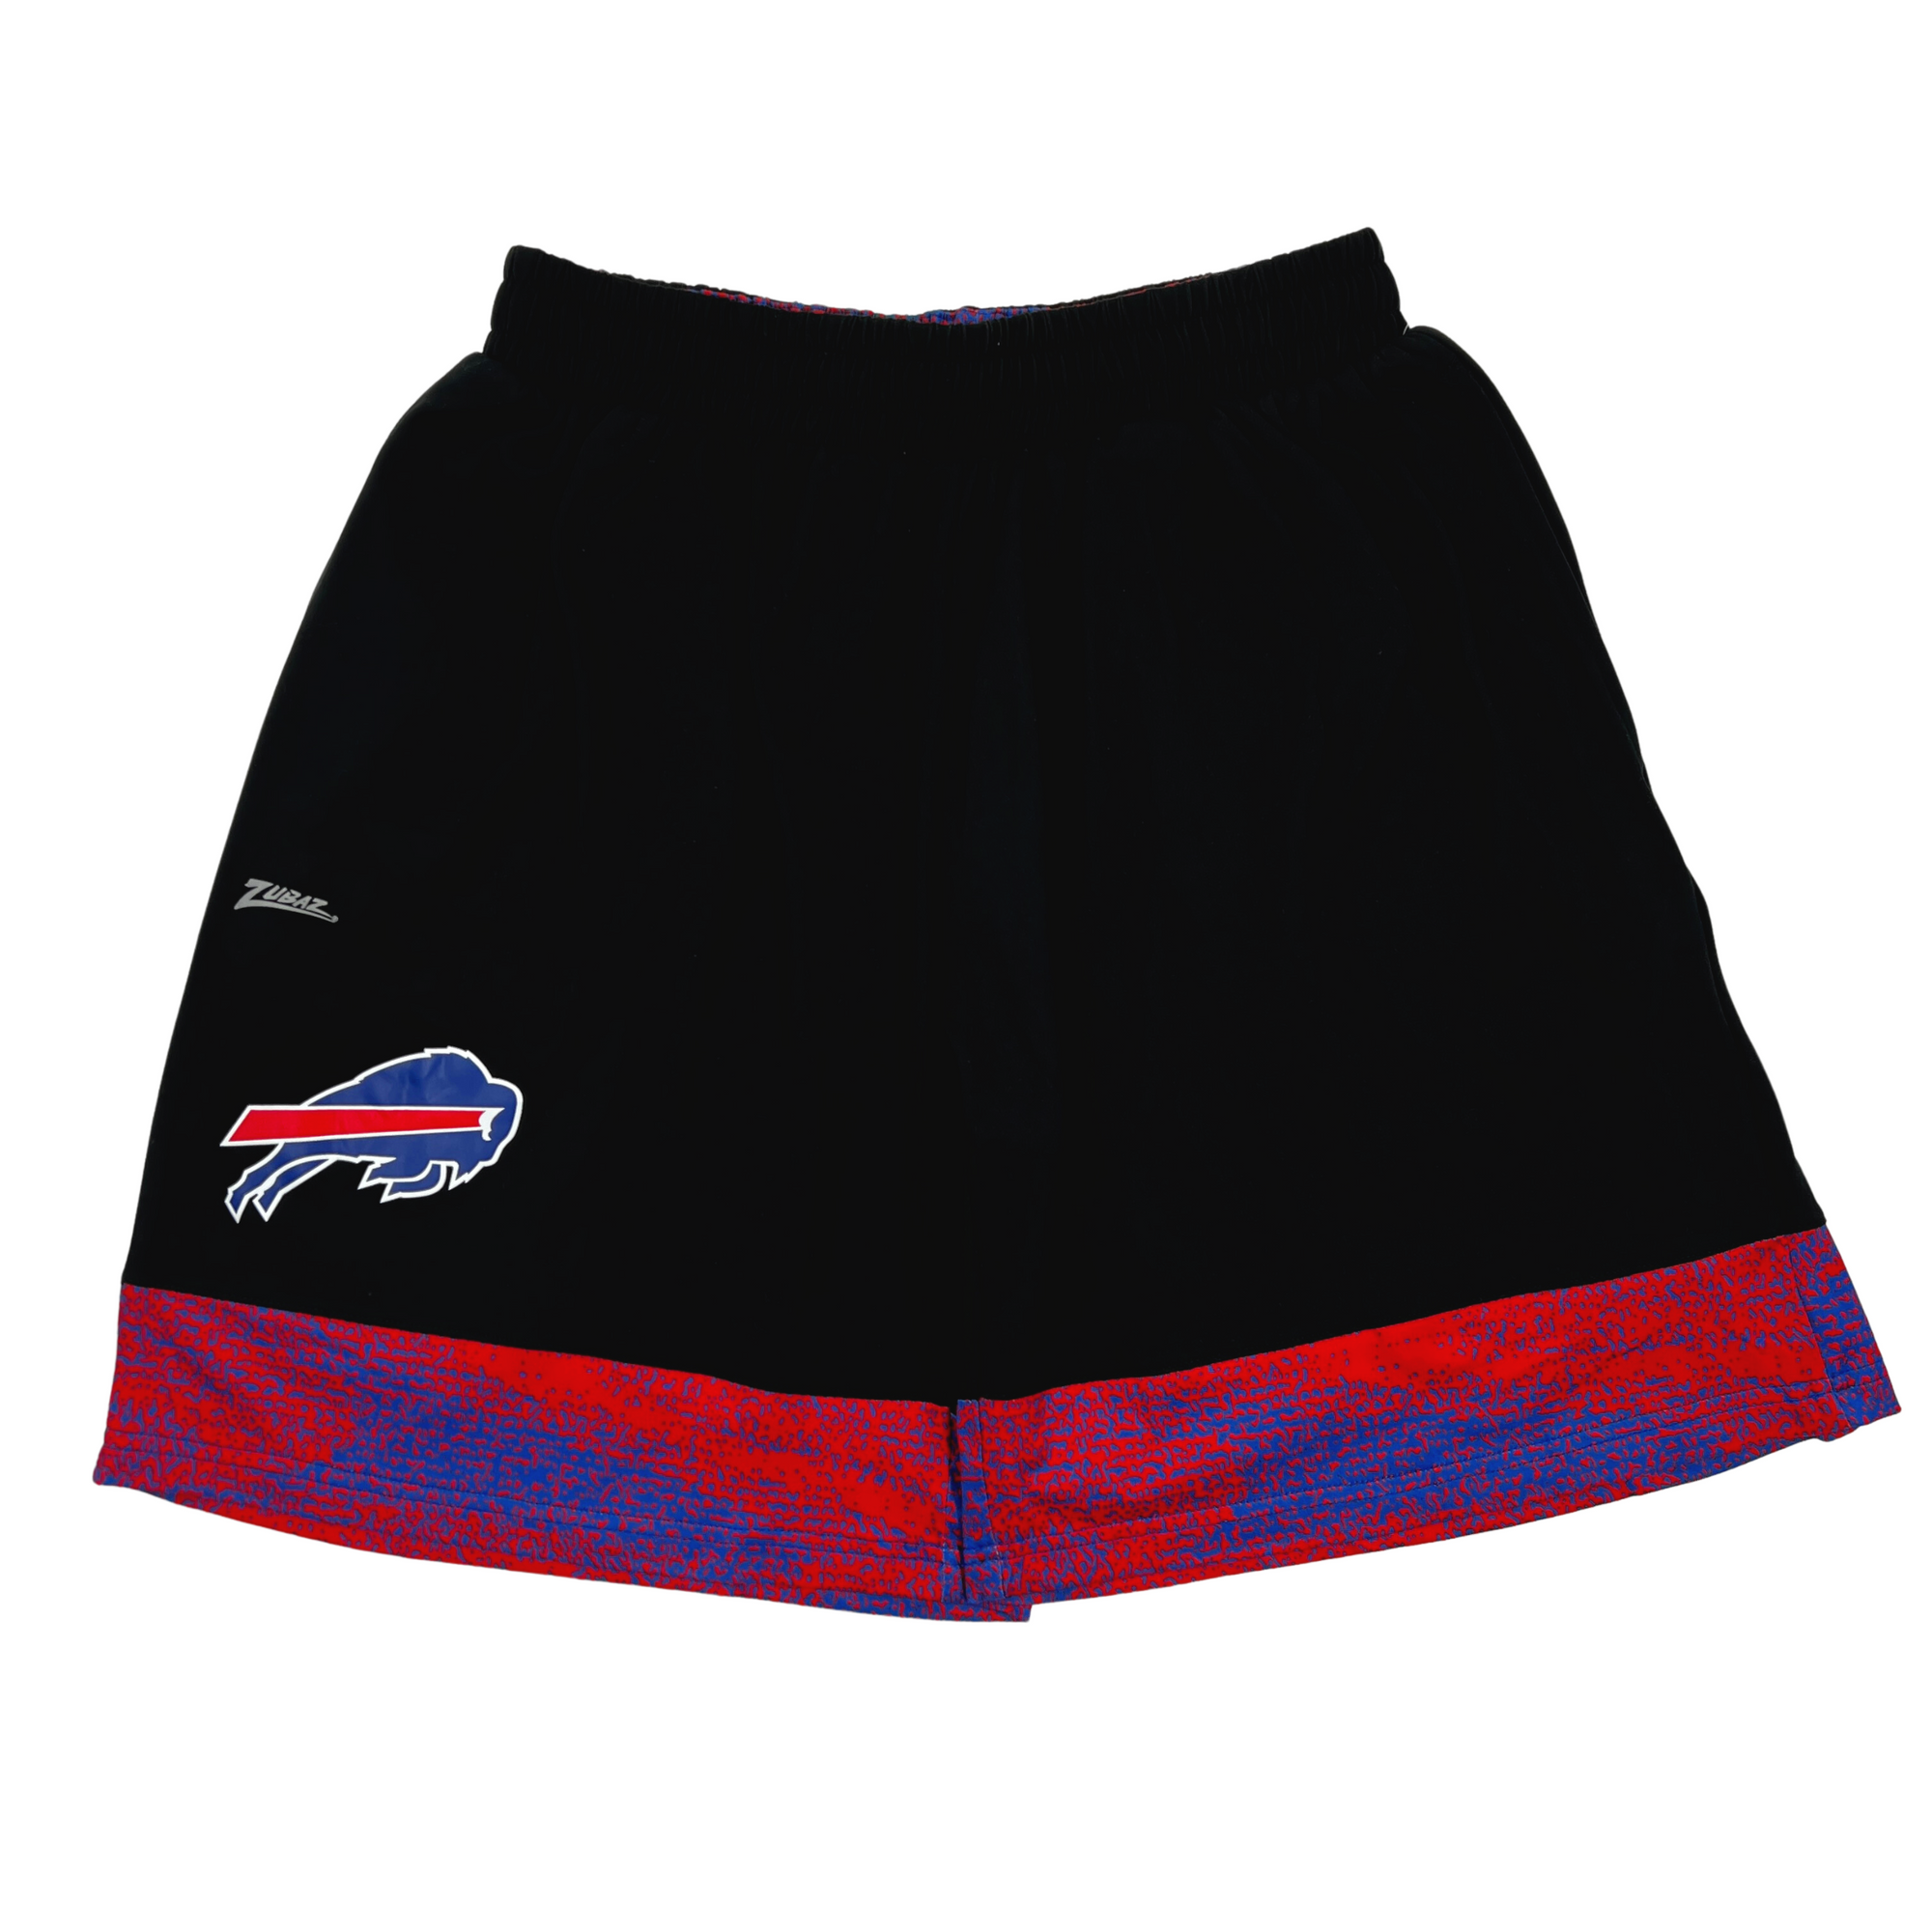 Zubaz Buffalo Bills Black With Red & Blue Print Shorts